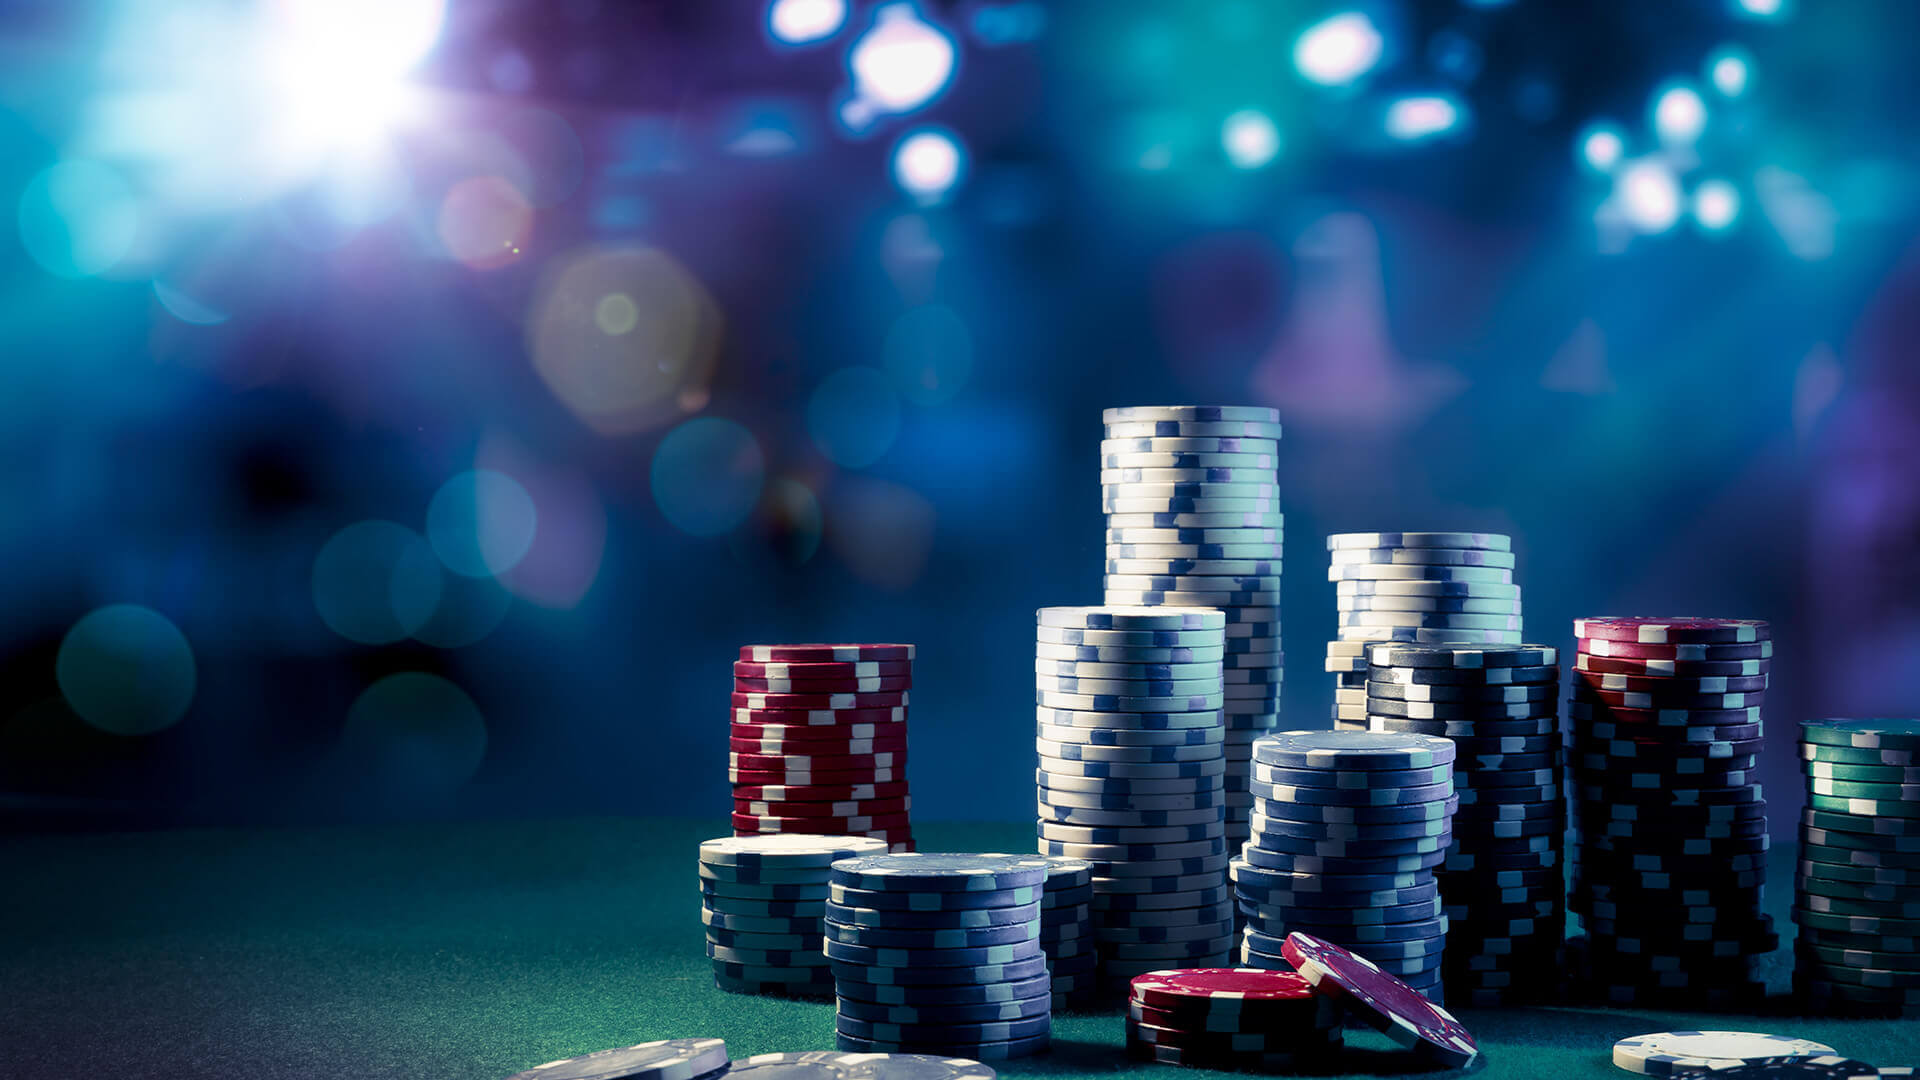 Casino online, free spins no deposit uk casino